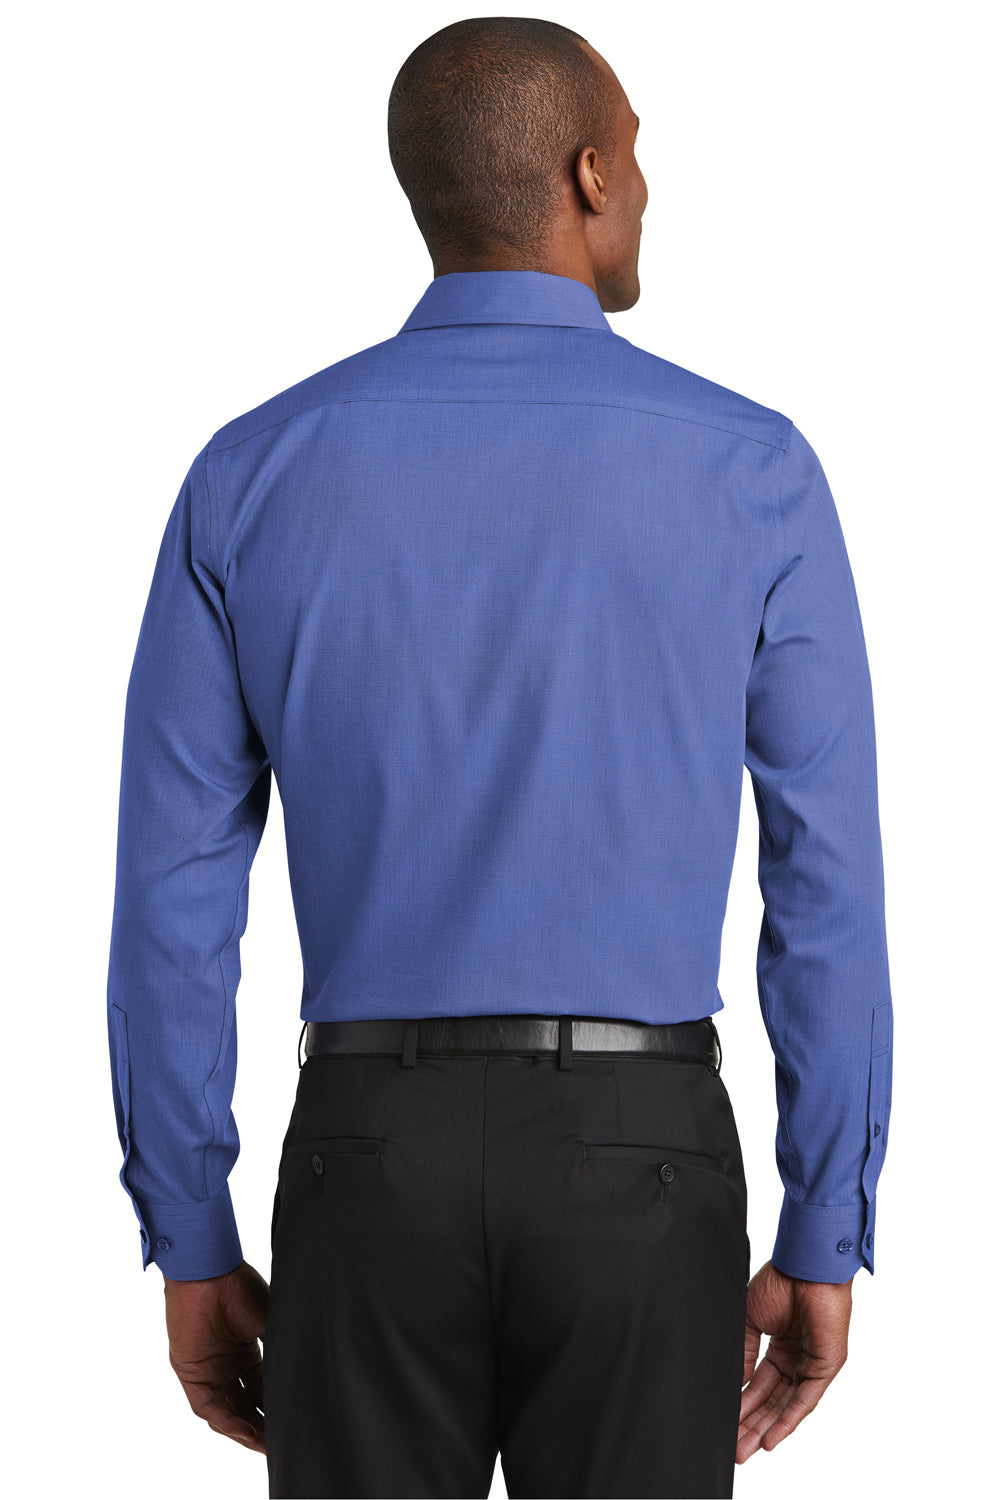 Red House RH390 Mens Nailhead Wrinkle Resistant Long Sleeve Button Down Shirt Mediterranean Blue Back